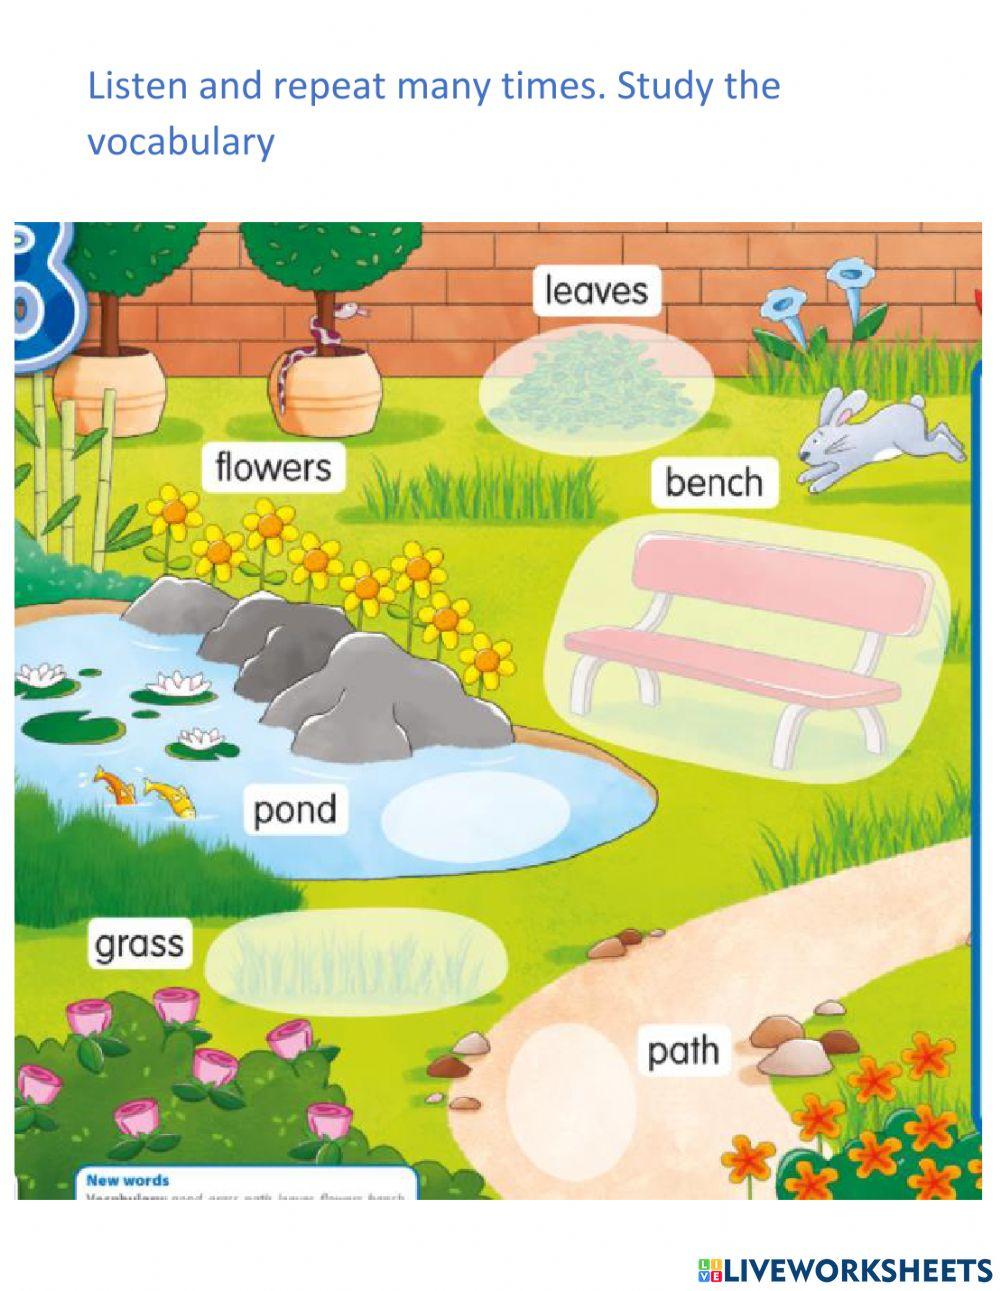 Garden vocabulary